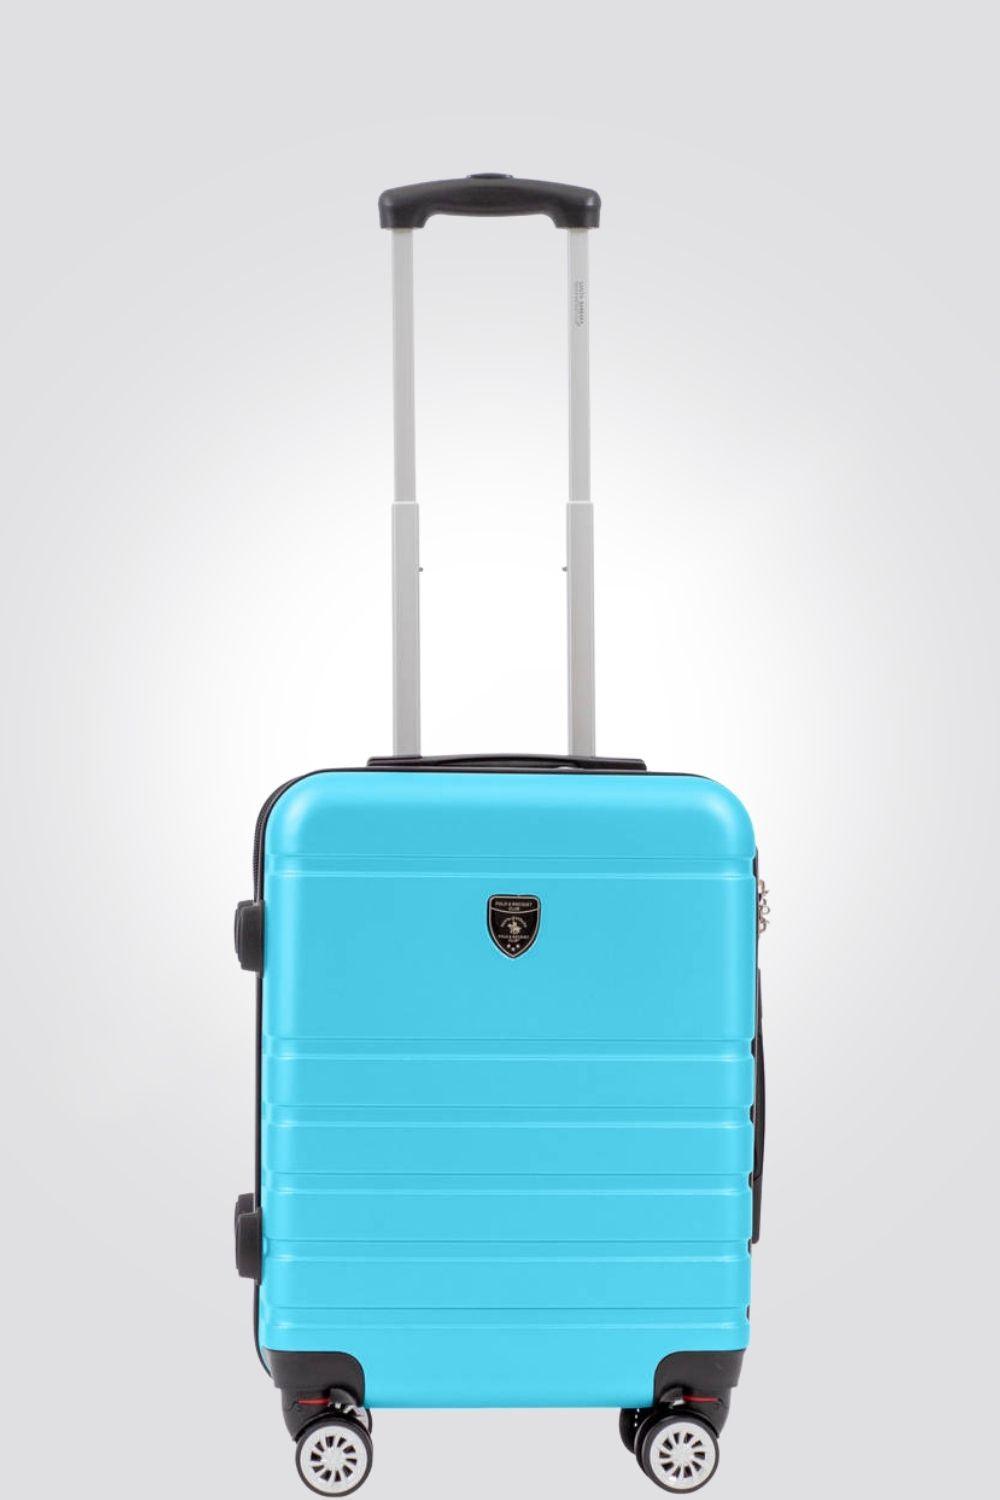 SANTA BARBARA POLO & RAQUET CLUB - מזוודה טרולי עלייה למטוס 20" דגם 1807 בצבע תכלת - MASHBIR//365